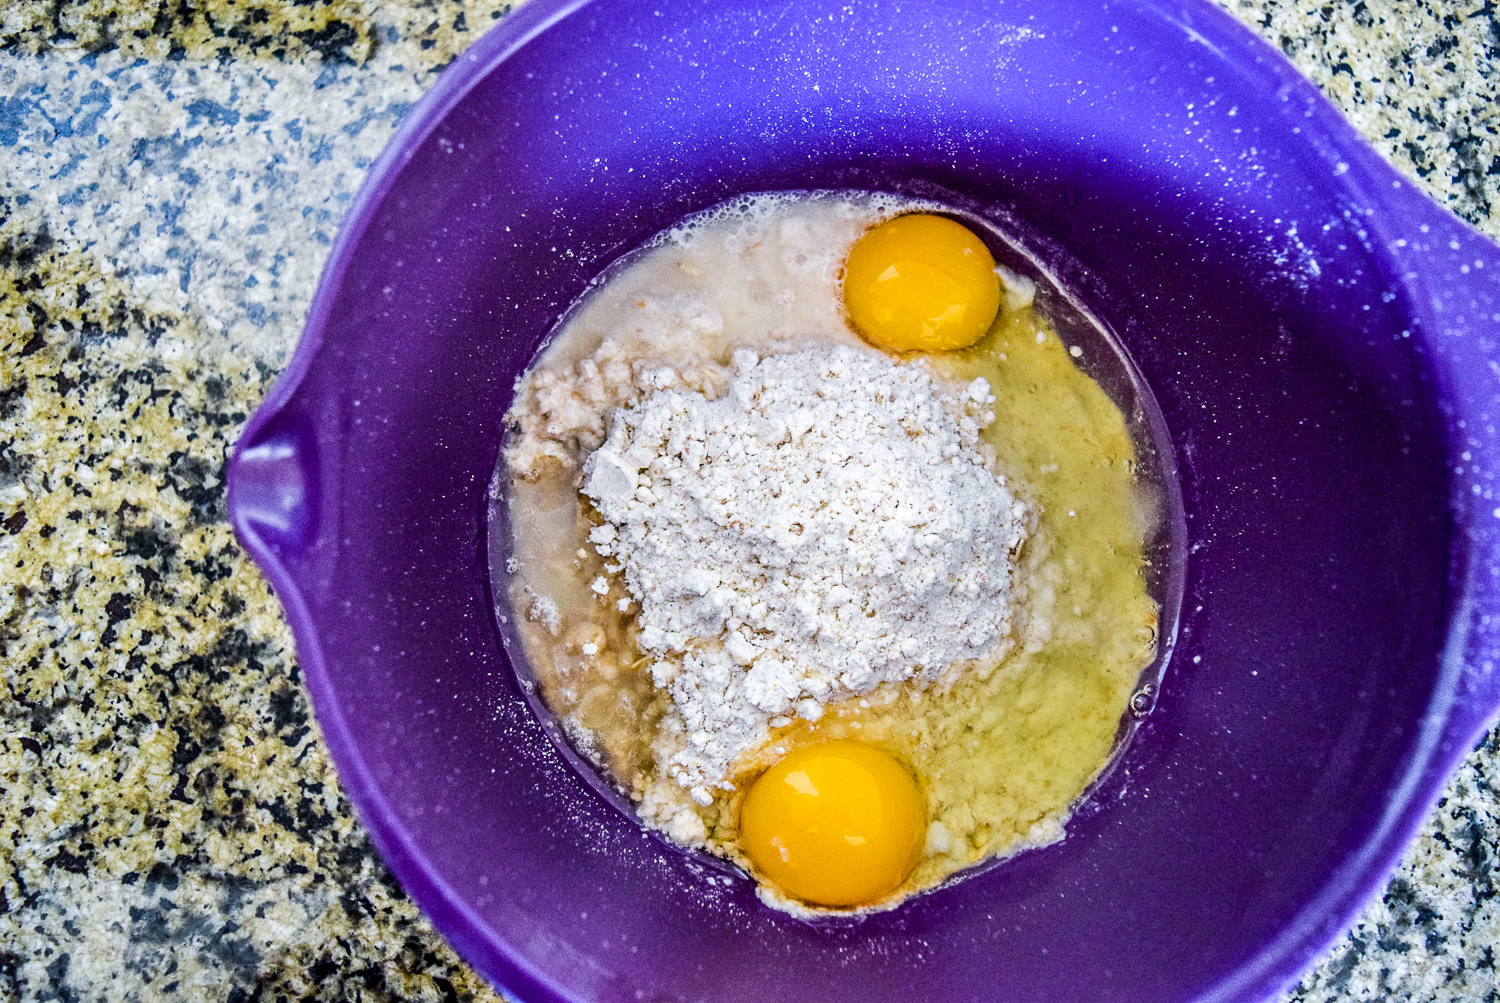 Trader Joe's Multigrain Baking & Pancake Mix, Milk, Canola Oil, and Eggs in KitchenAid Mixing Bowl